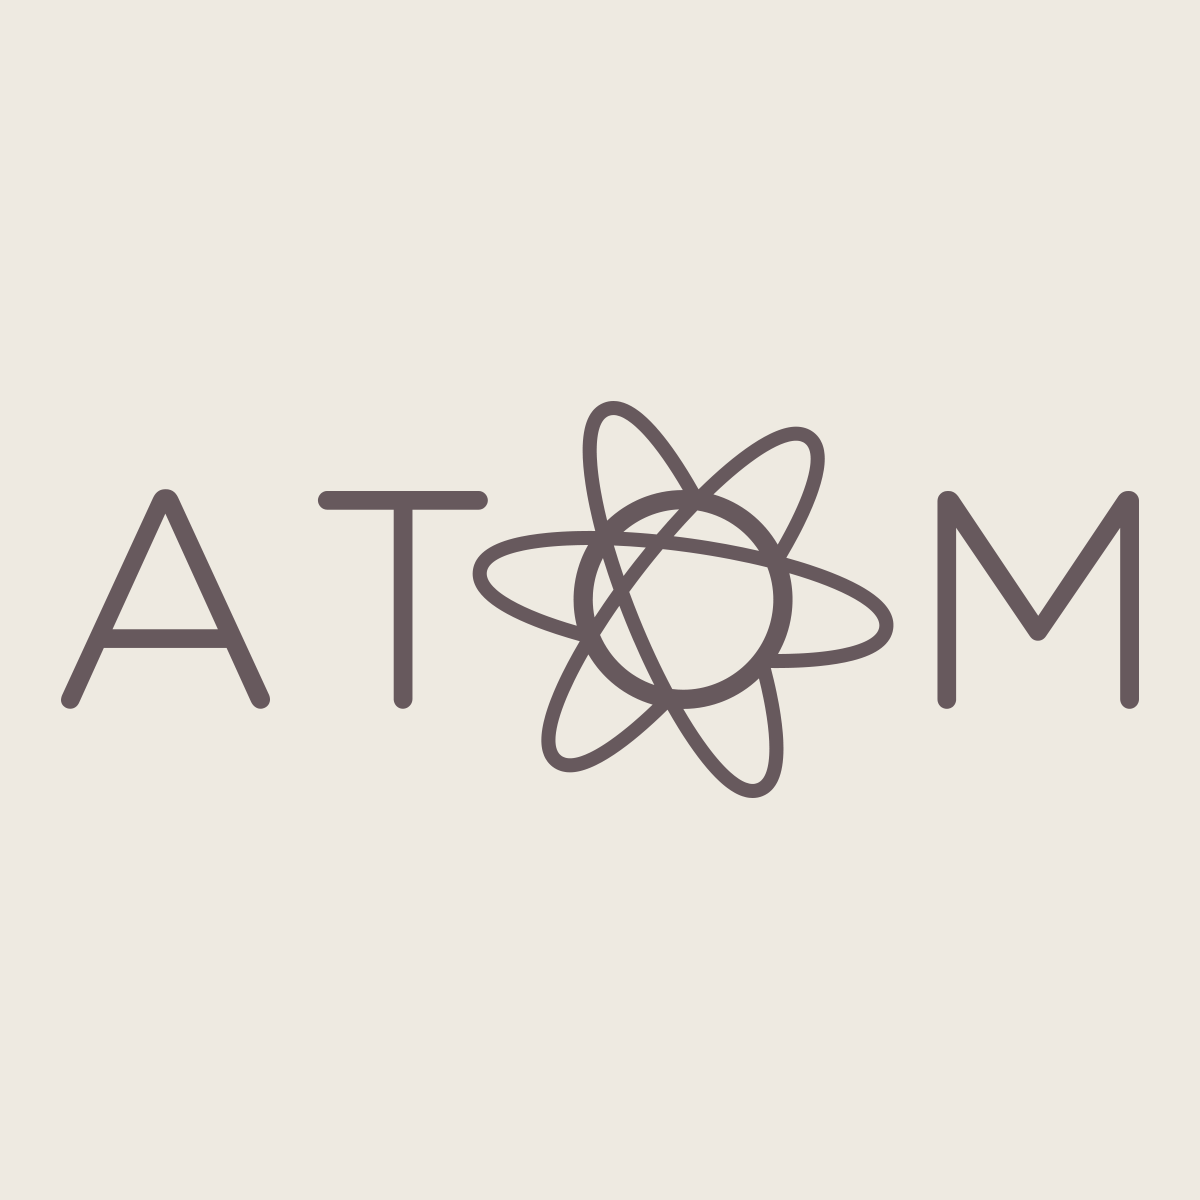 plain text editor atom